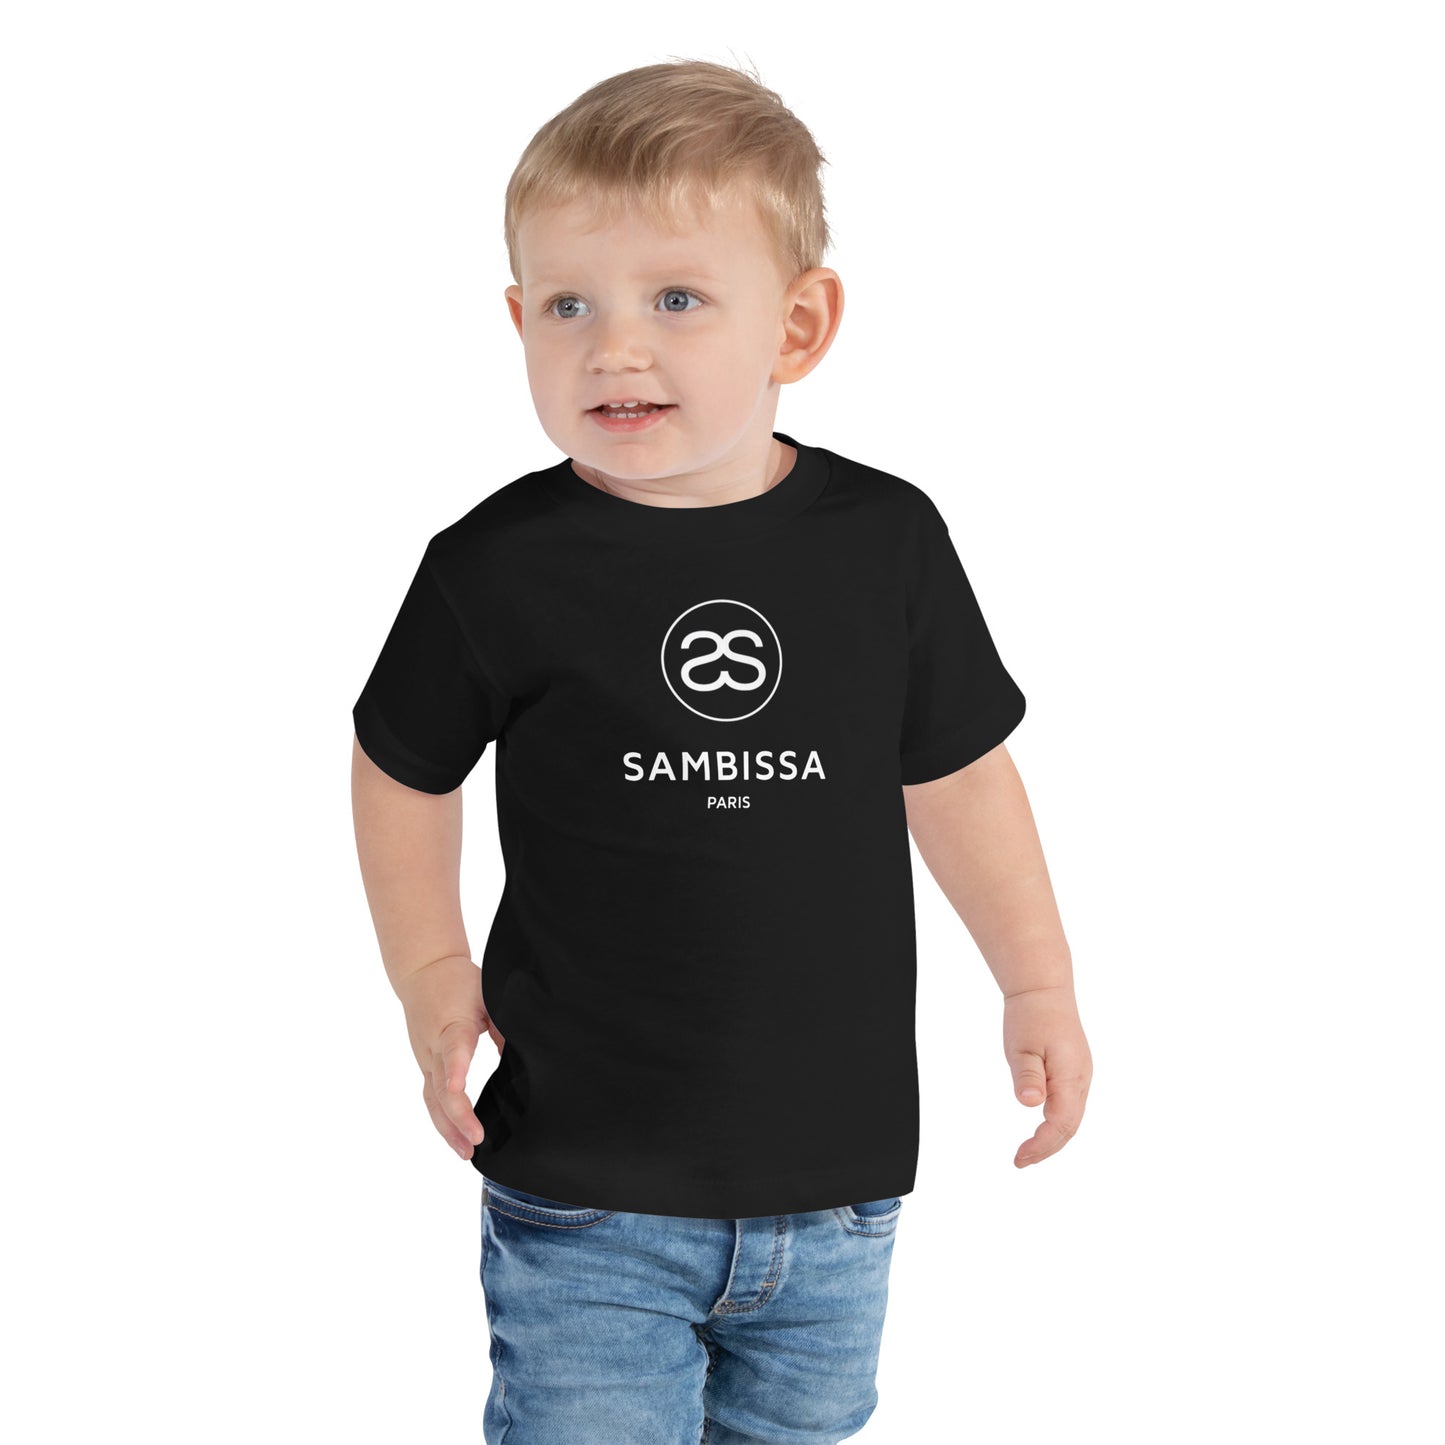 Sambissa Toddler Short Sleeve T-shirt